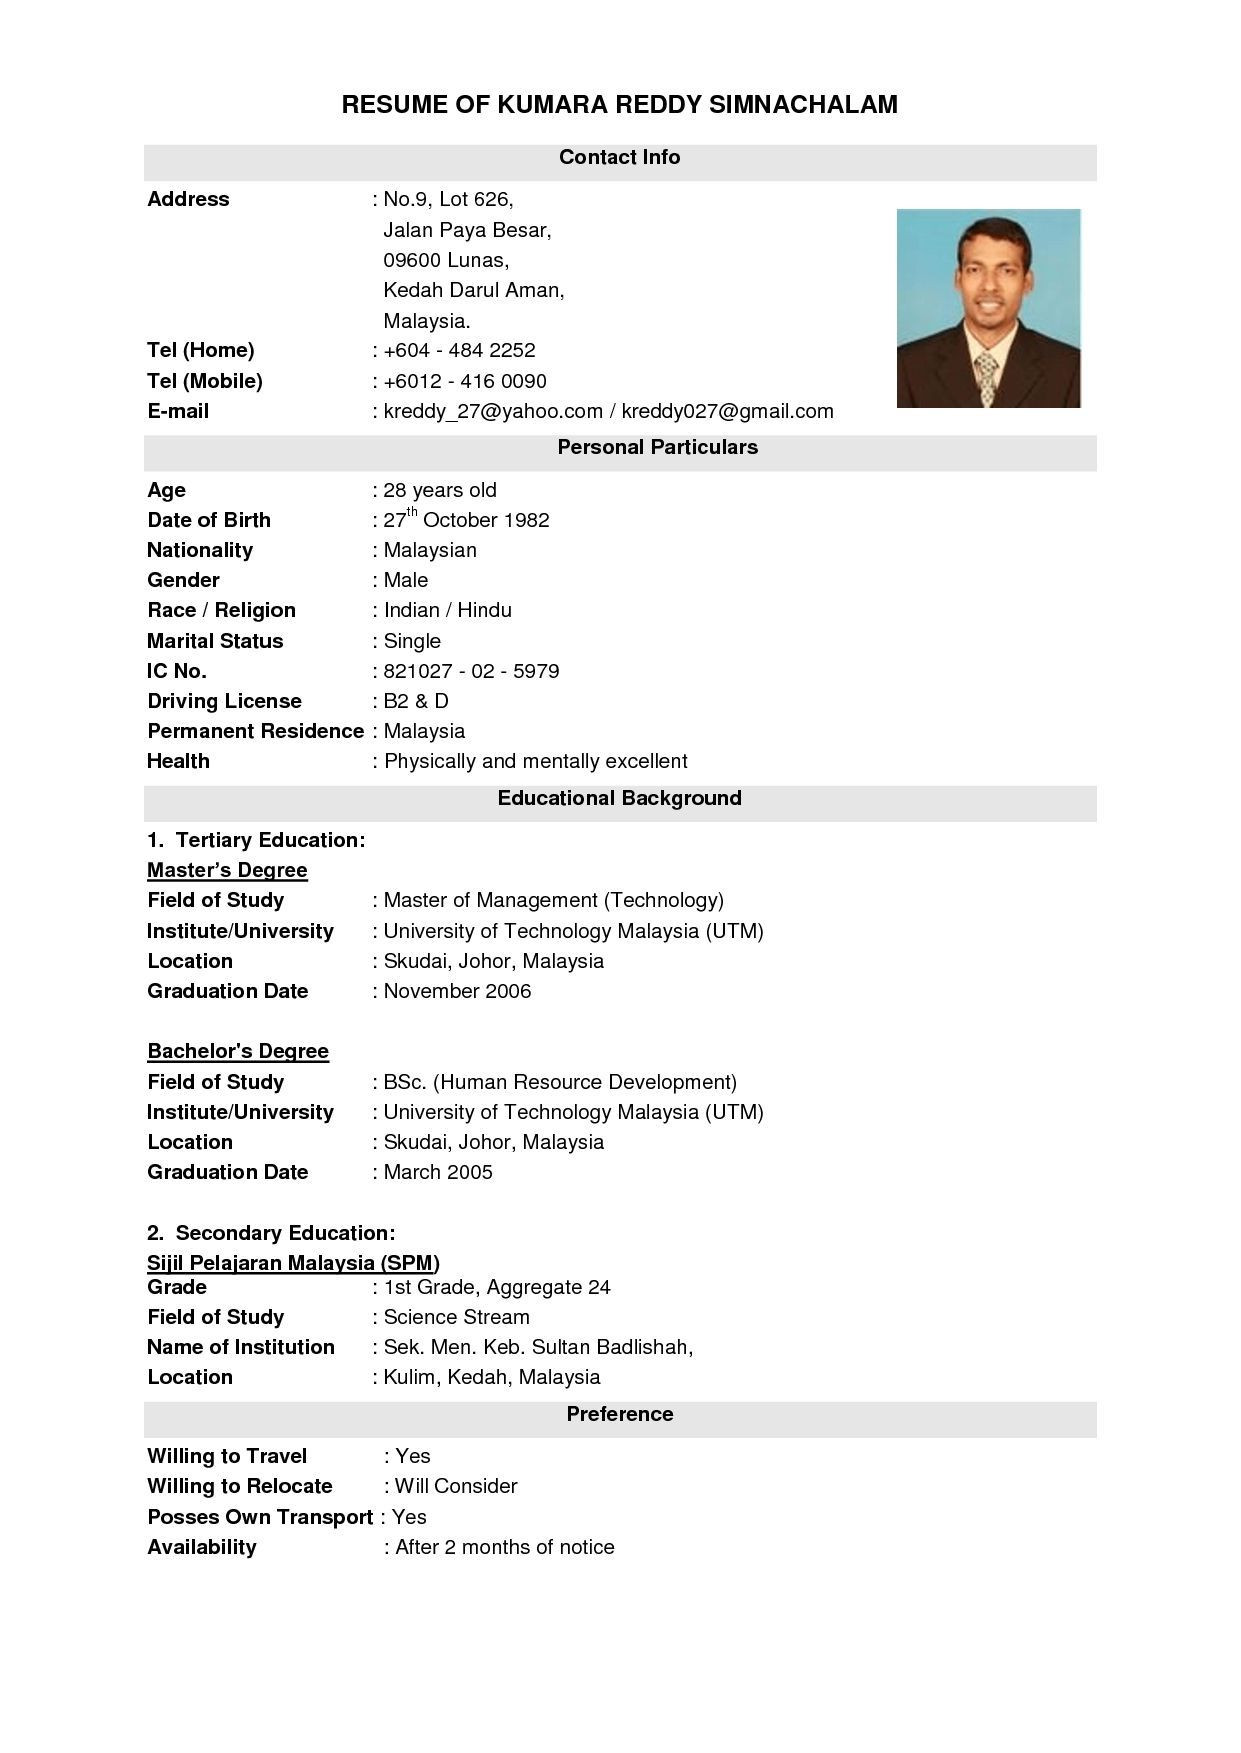 Resume Template for Fresh Graduate Malaysia Resume Templates Jobstreet #jobstreet #resume #resumetemplates …